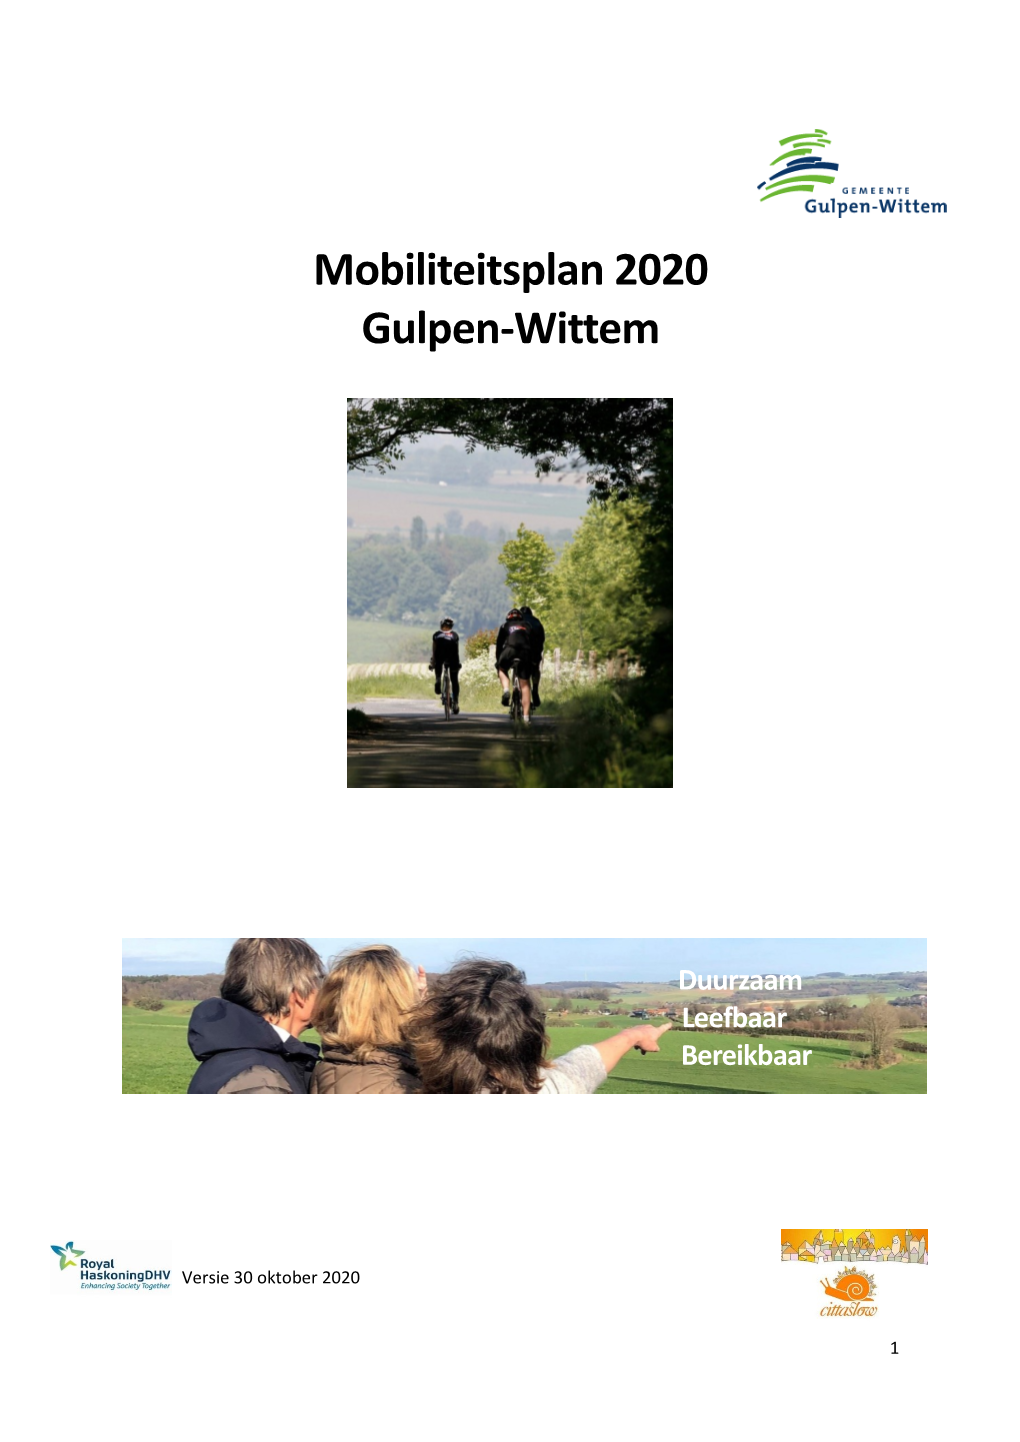 Mobiliteitsplan 2020 Gulpen Wittem